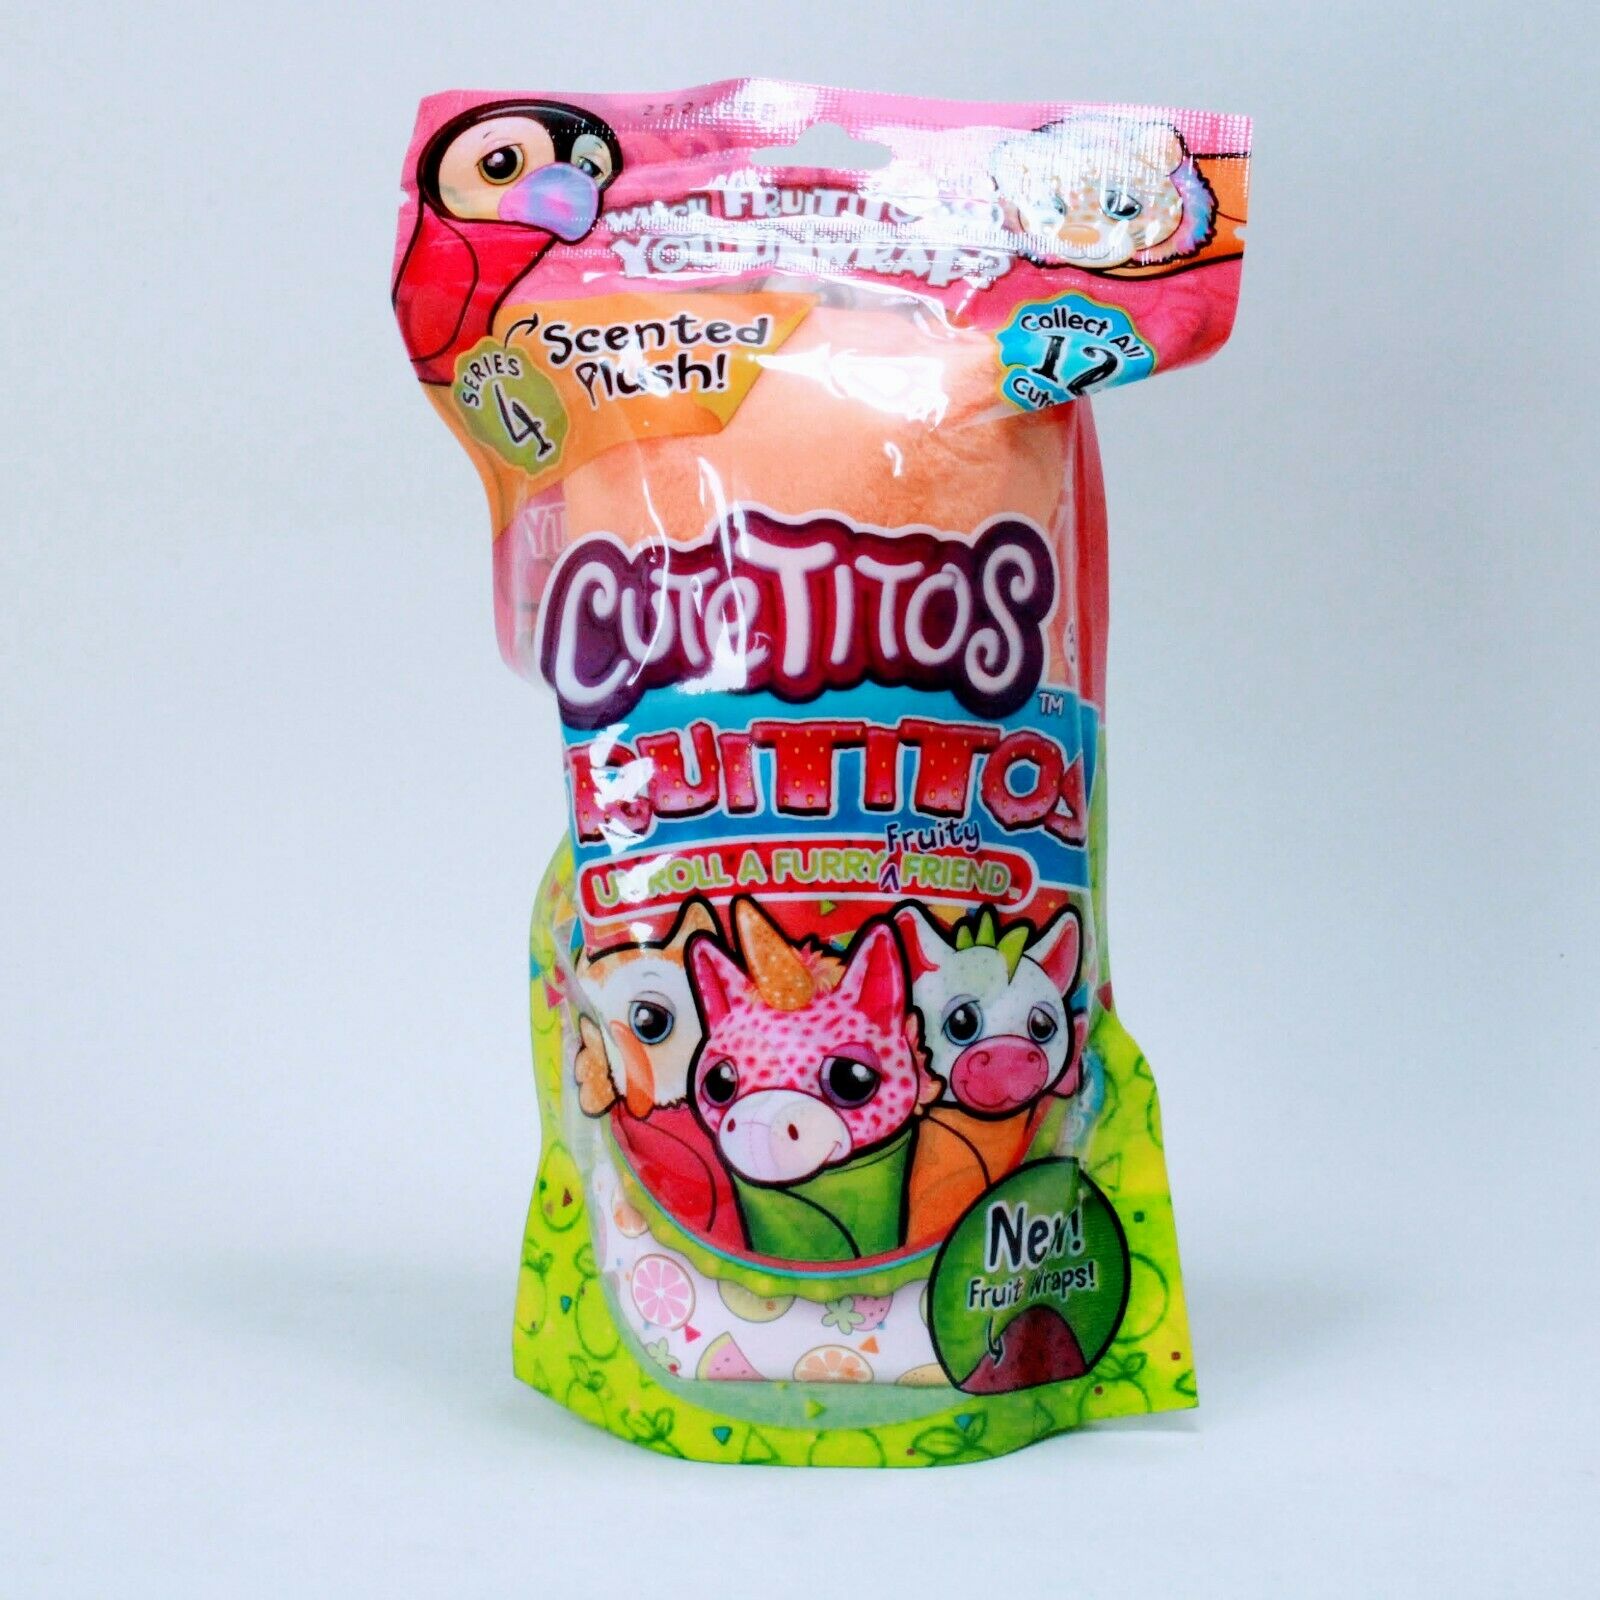 Cutetitos Fruititos Surprise Stuffed Animals w/ Scented Plush - Series 4 -